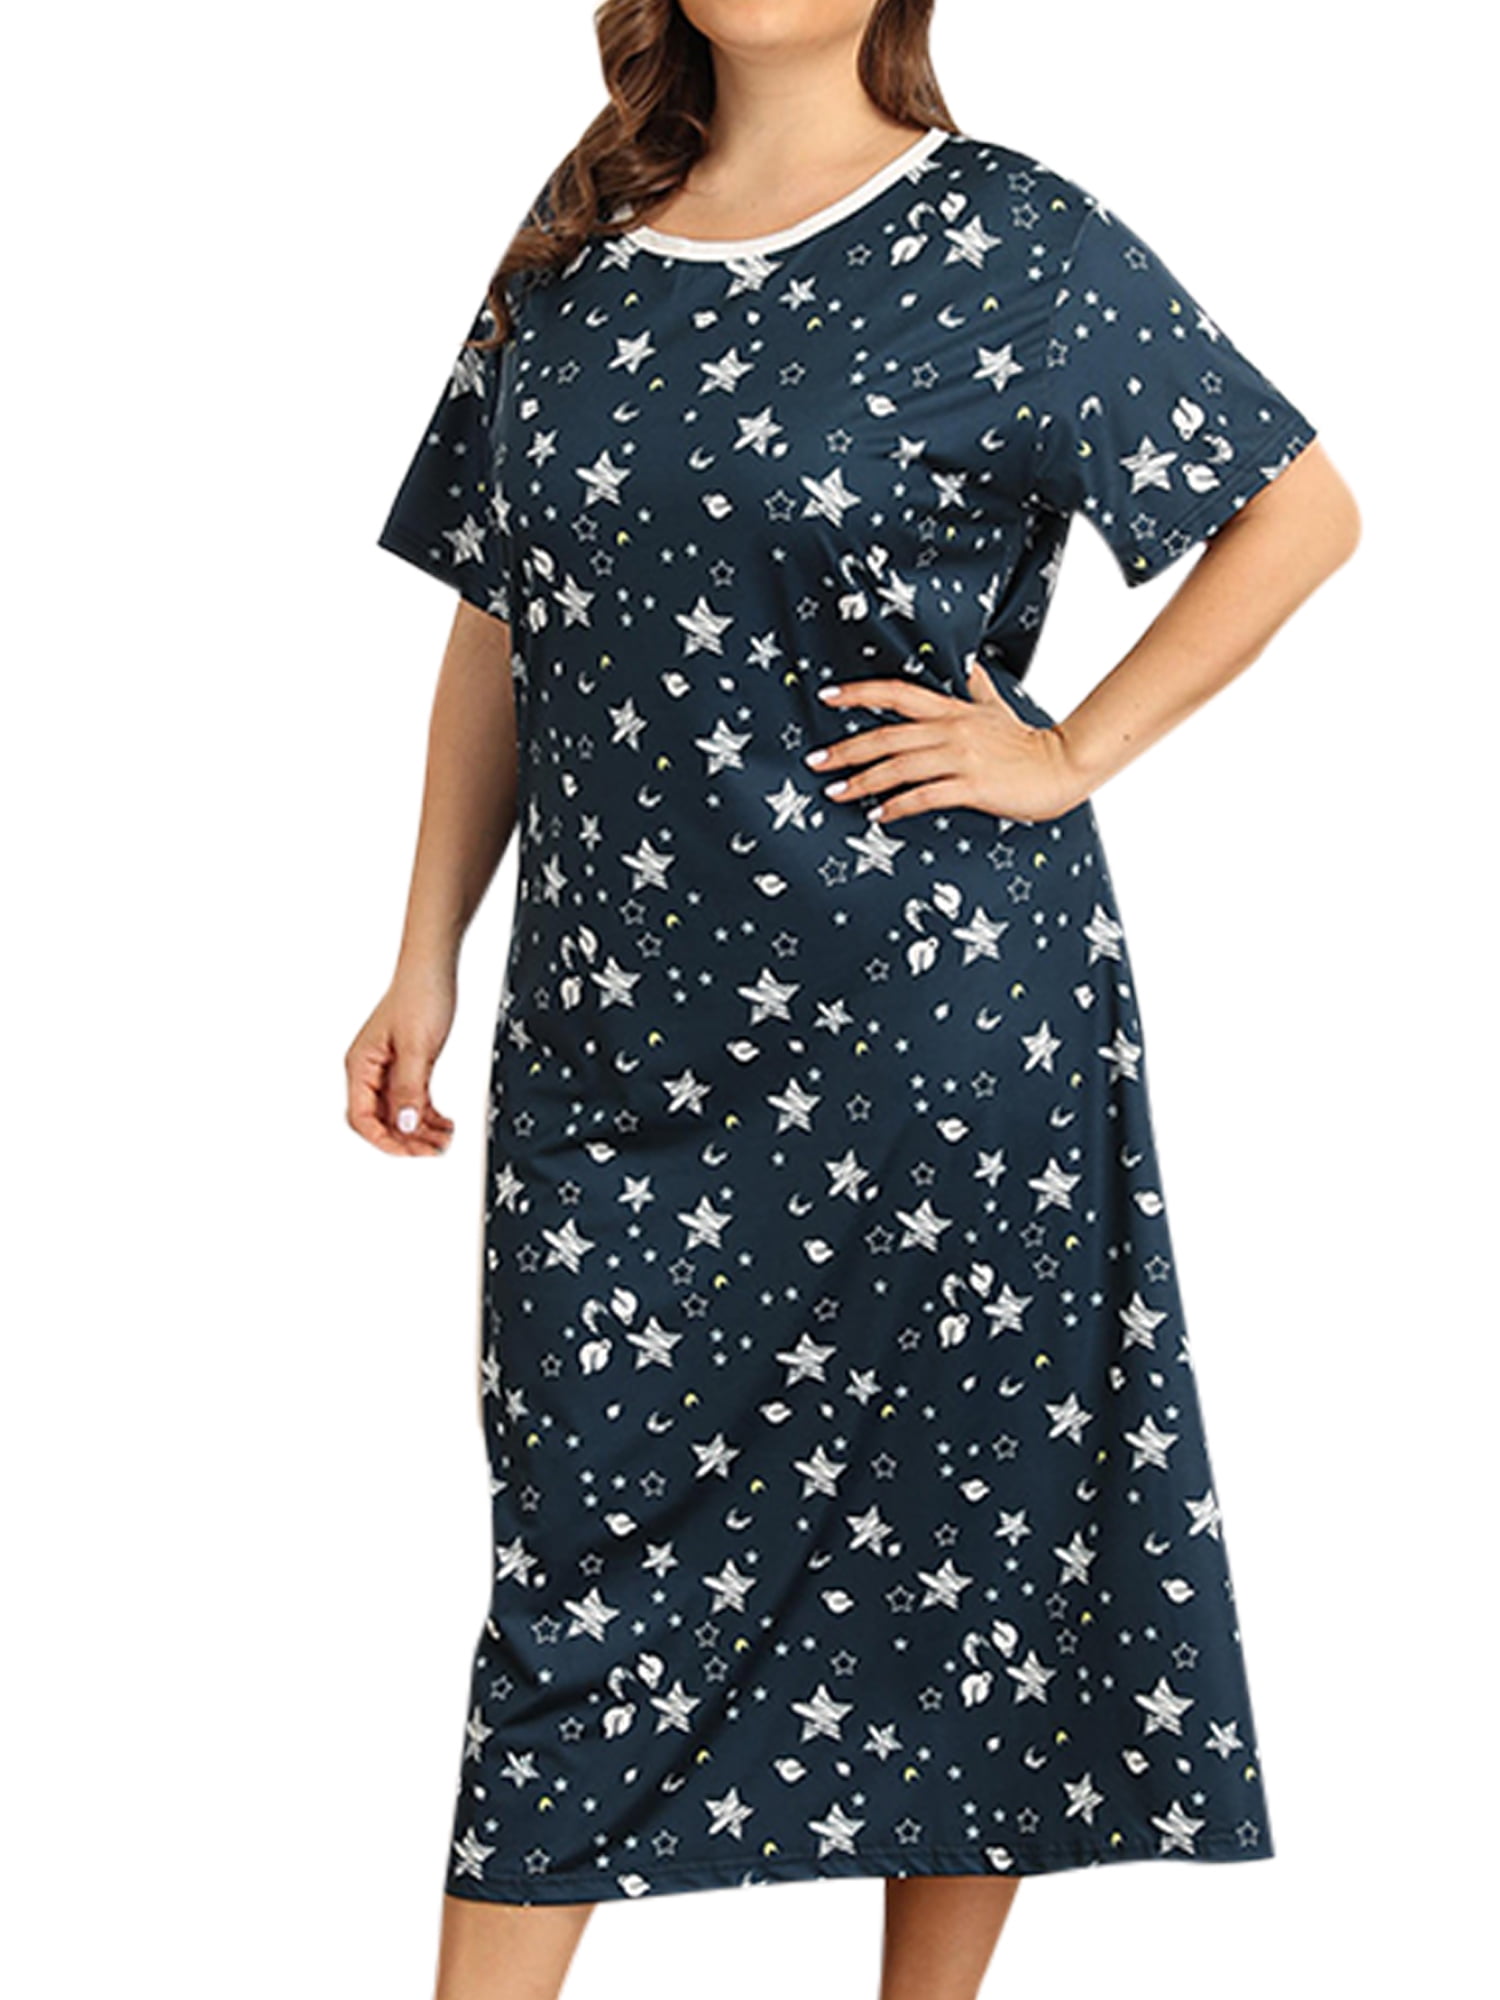 XL-4XL Plus Size Nightgown Women Short Sleeve Nightdress Loose ...